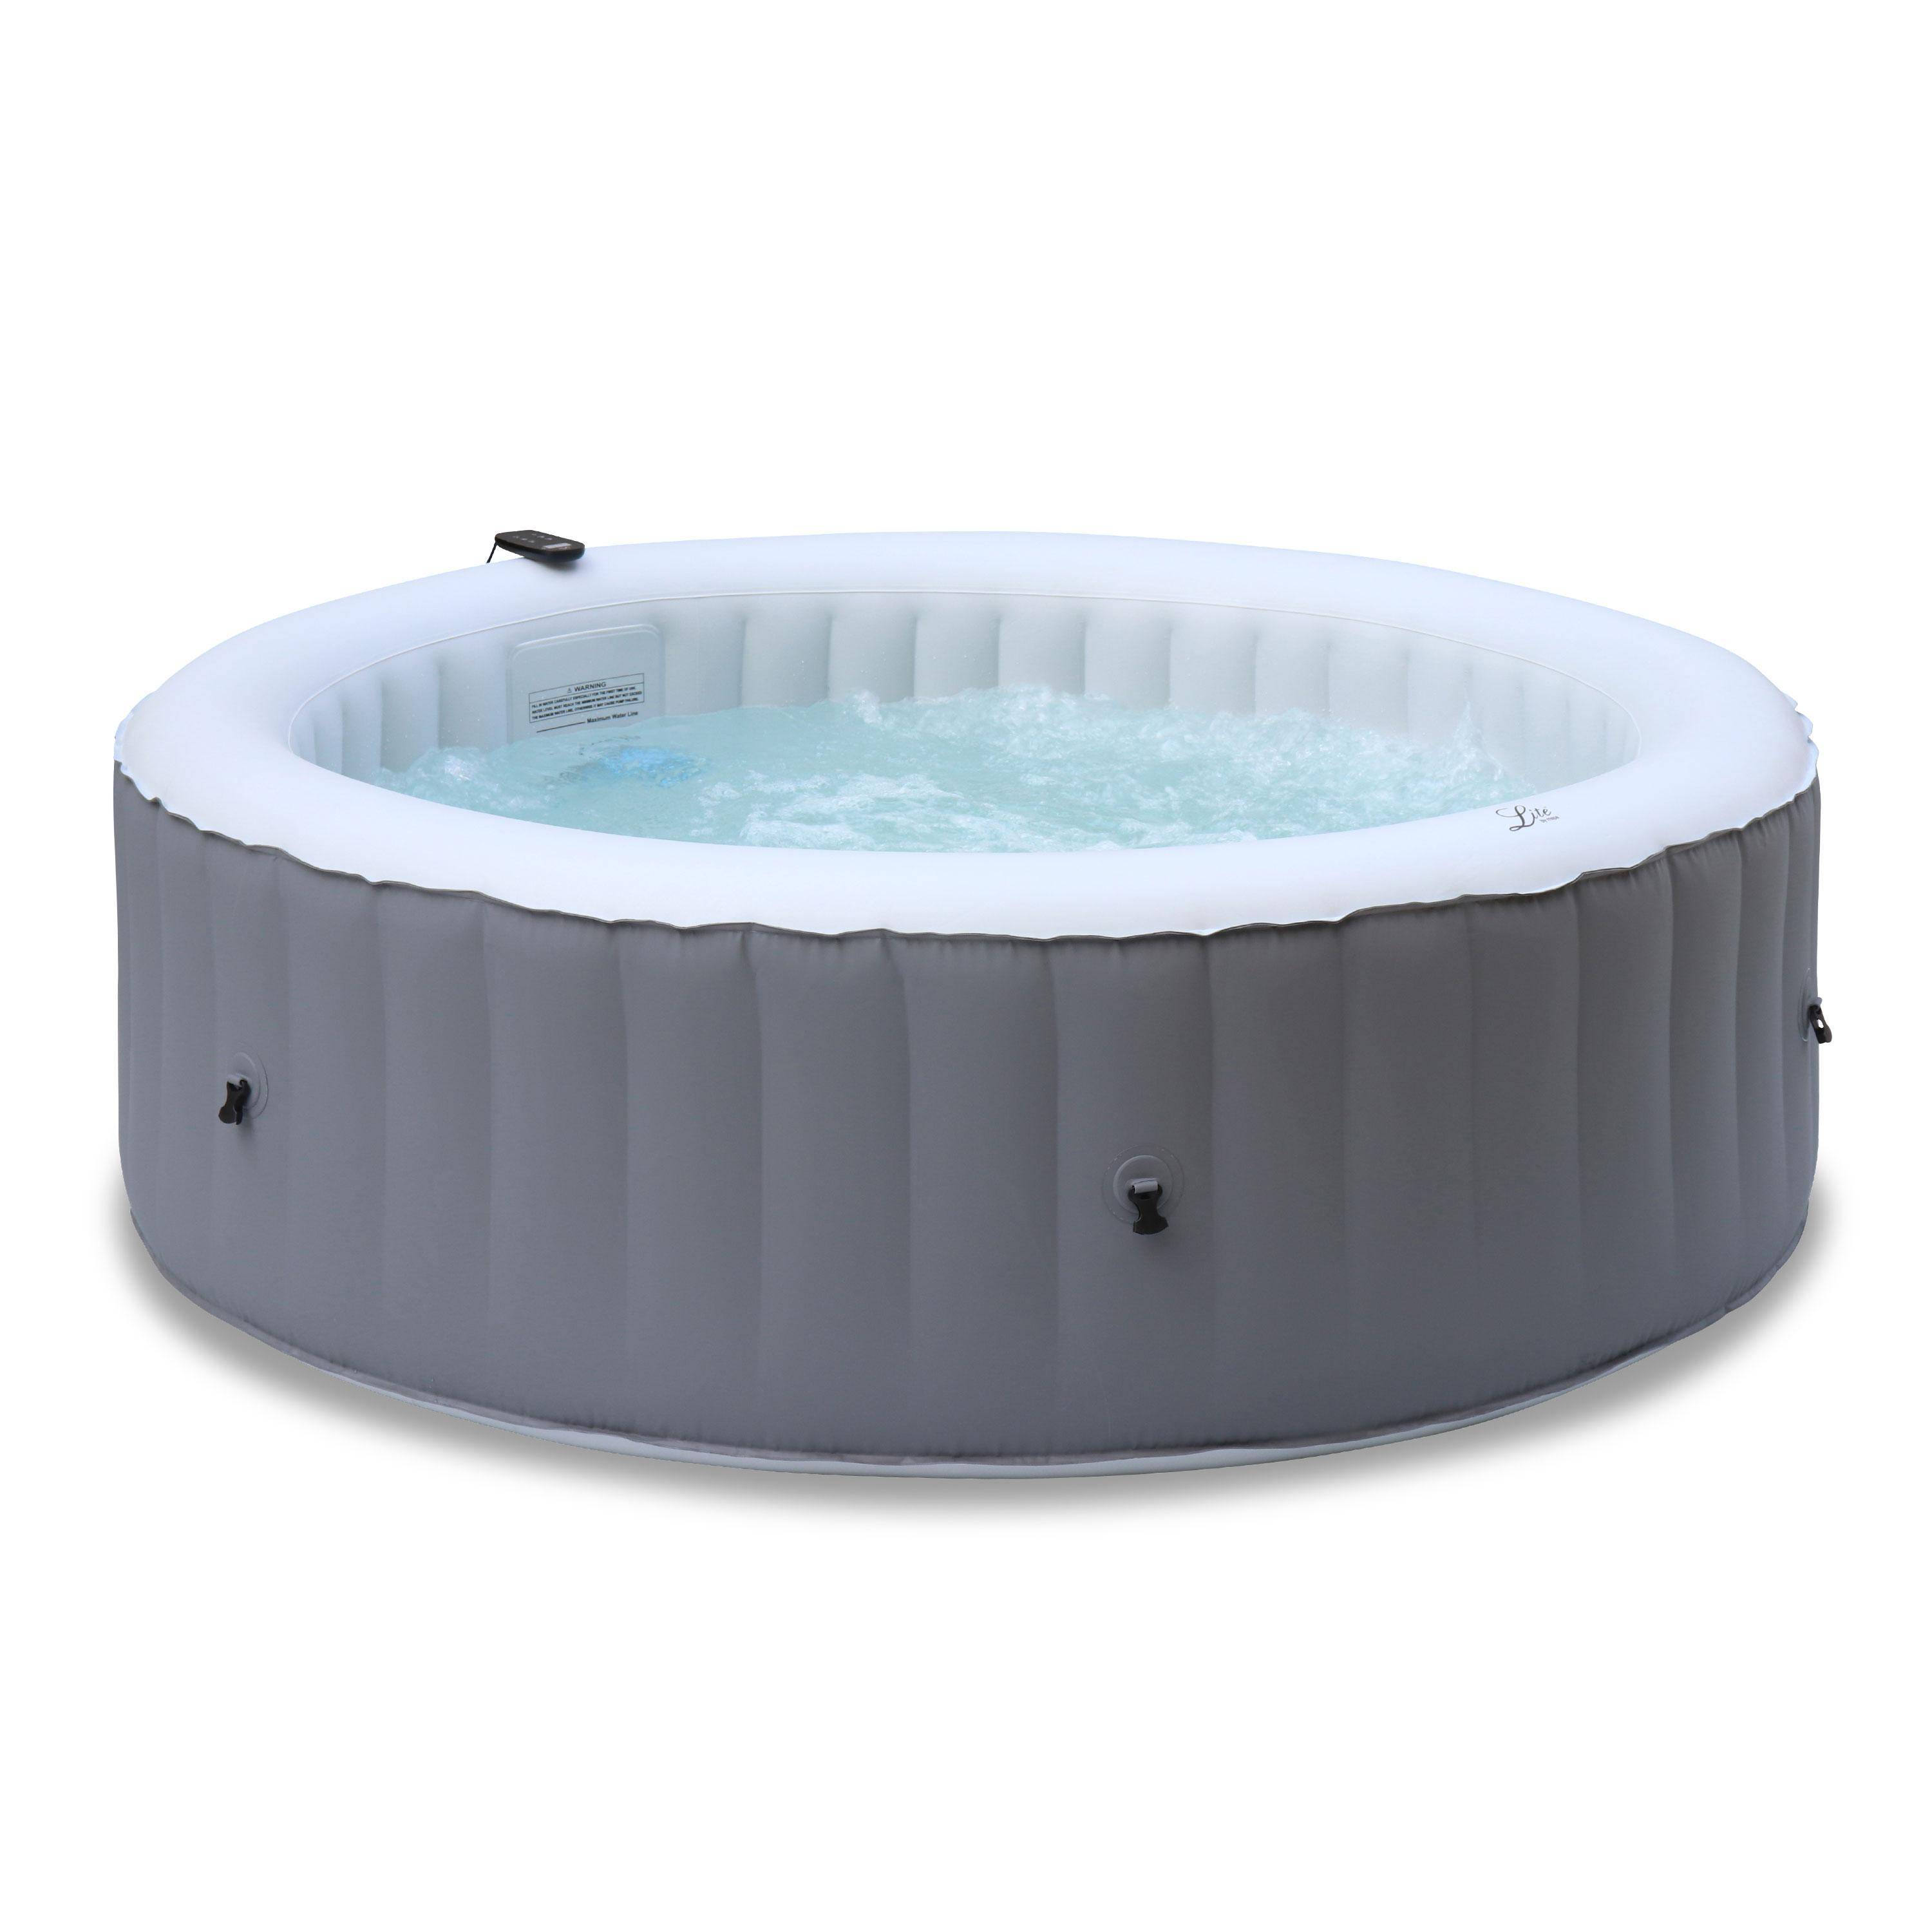  6-person round inflatable hot tub MSpa - Ø205cm round 6-person spa, PVC, pump, heater, filter, remote control - Kili 6 - Grey,sweeek,Photo1